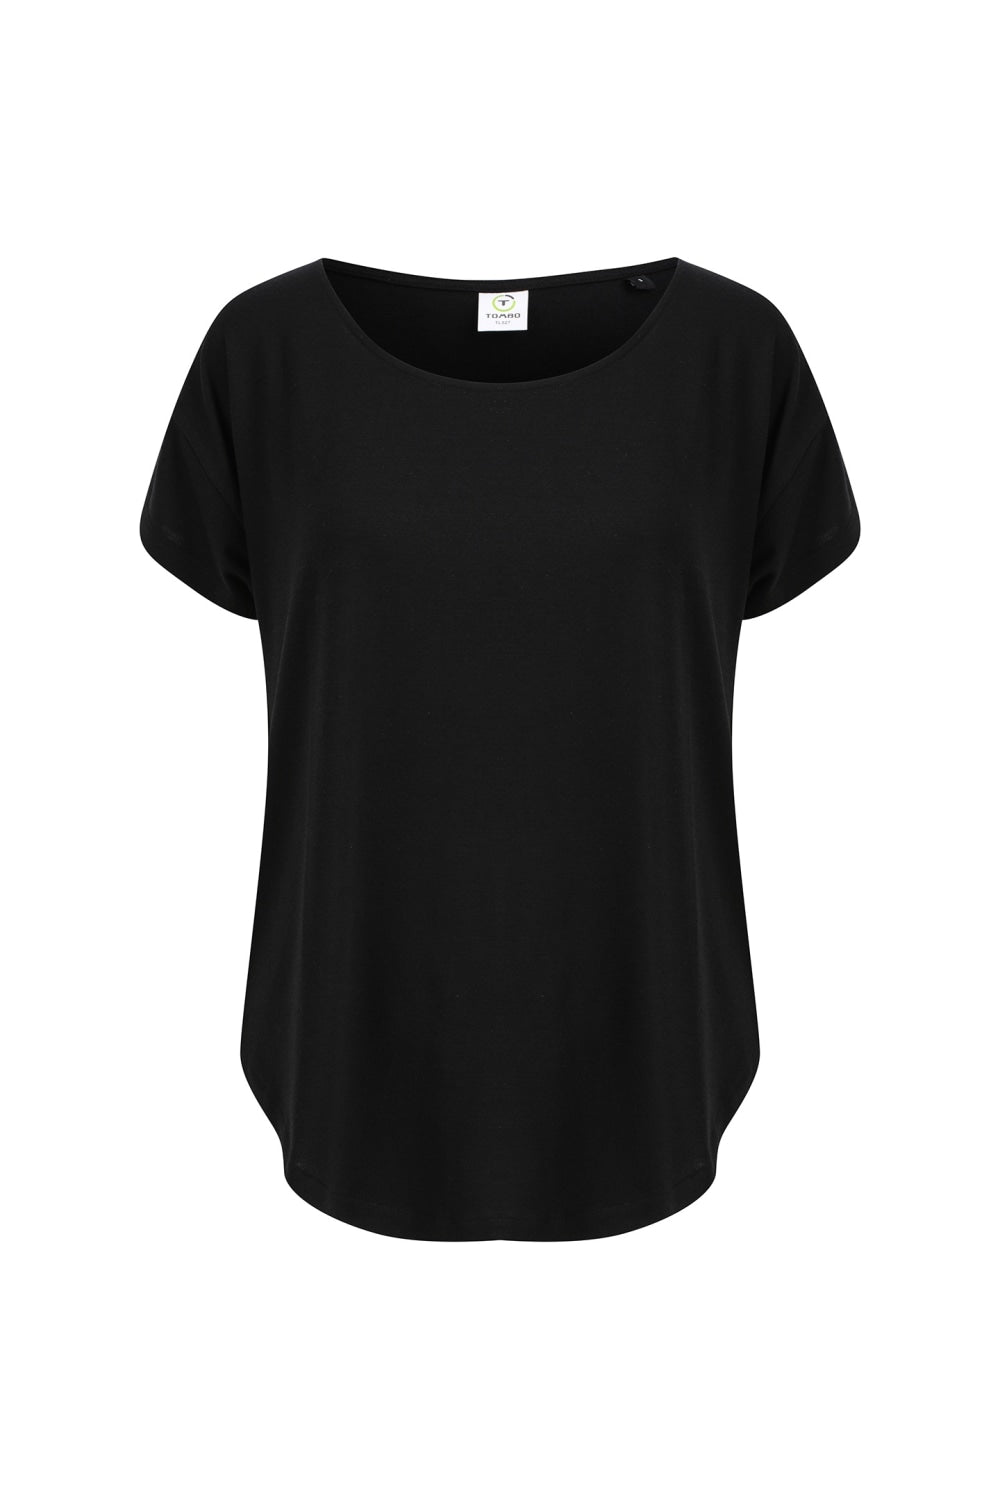 Womens/Ladies Scoop Neck T-Shirt